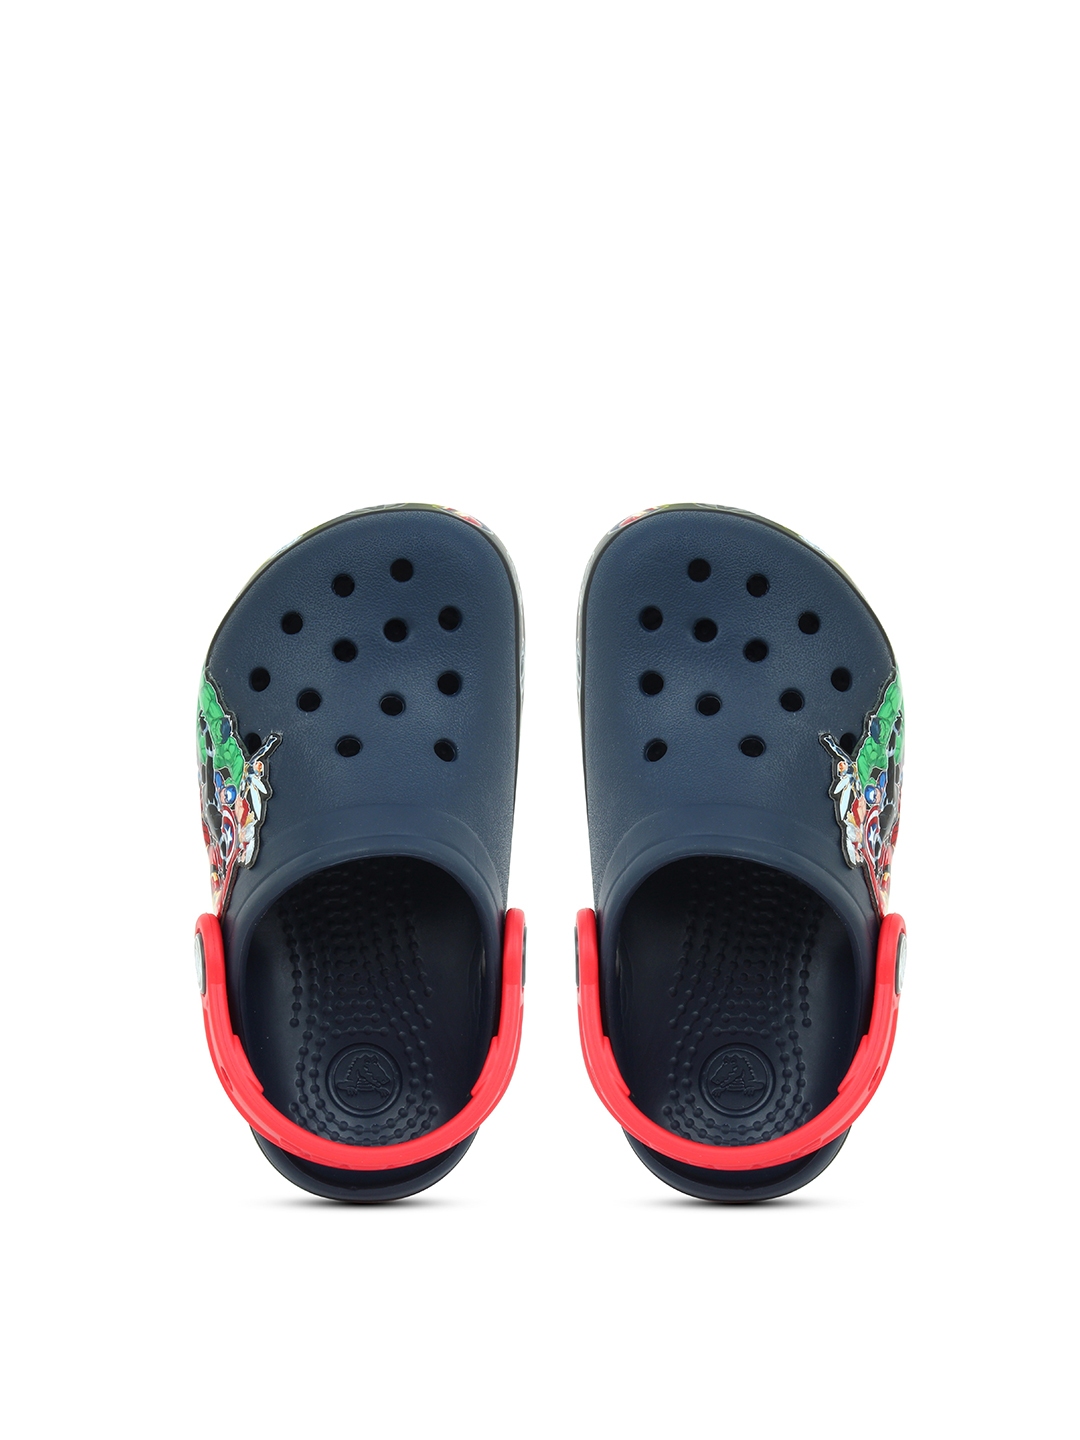 Buy Crocs Boys Navy Blue & Red Solid Clogs - Flip Flops for Boys ...